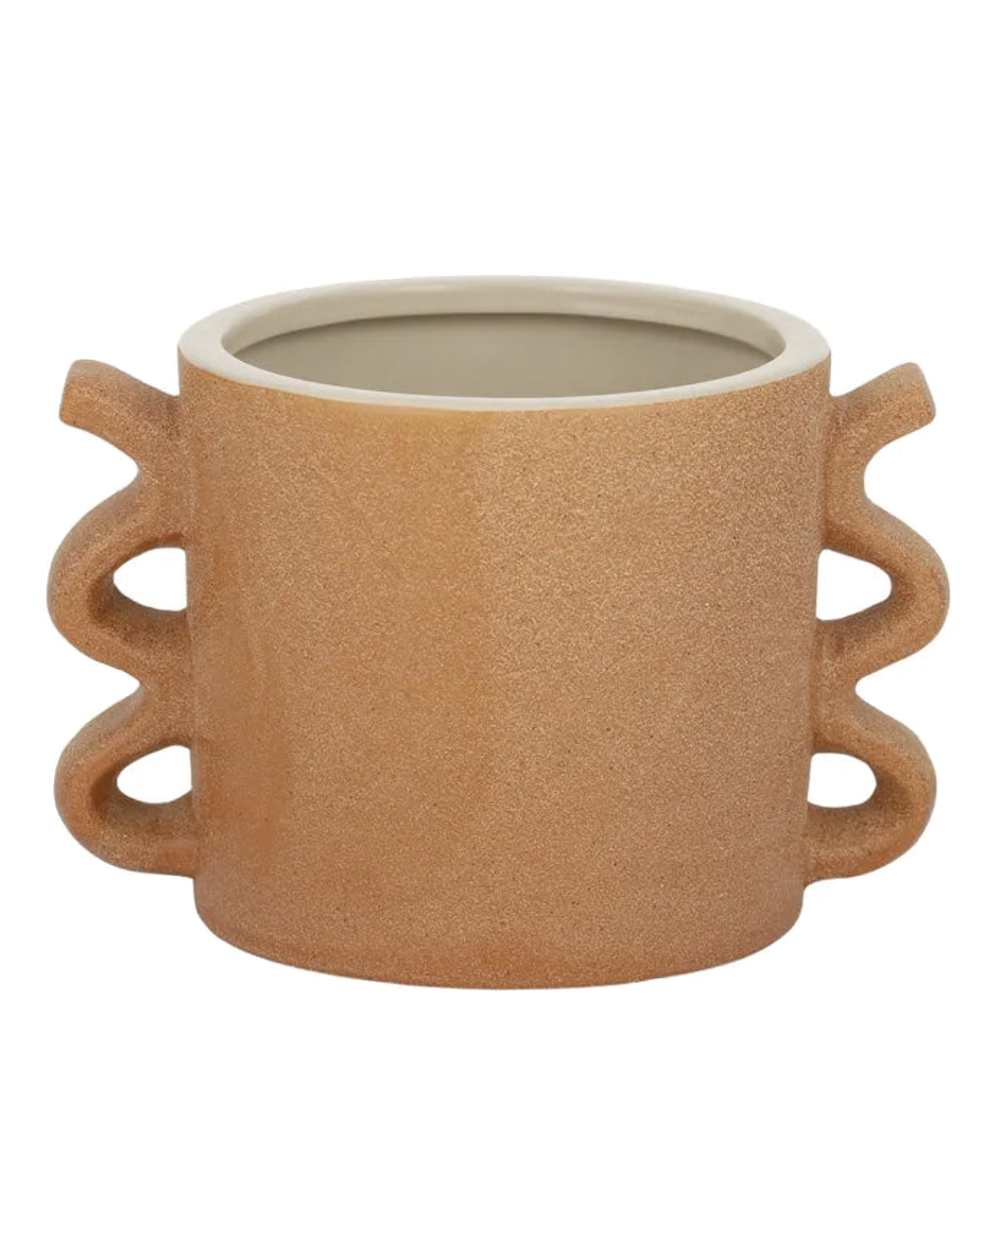 Hilbert Ceramic Pot